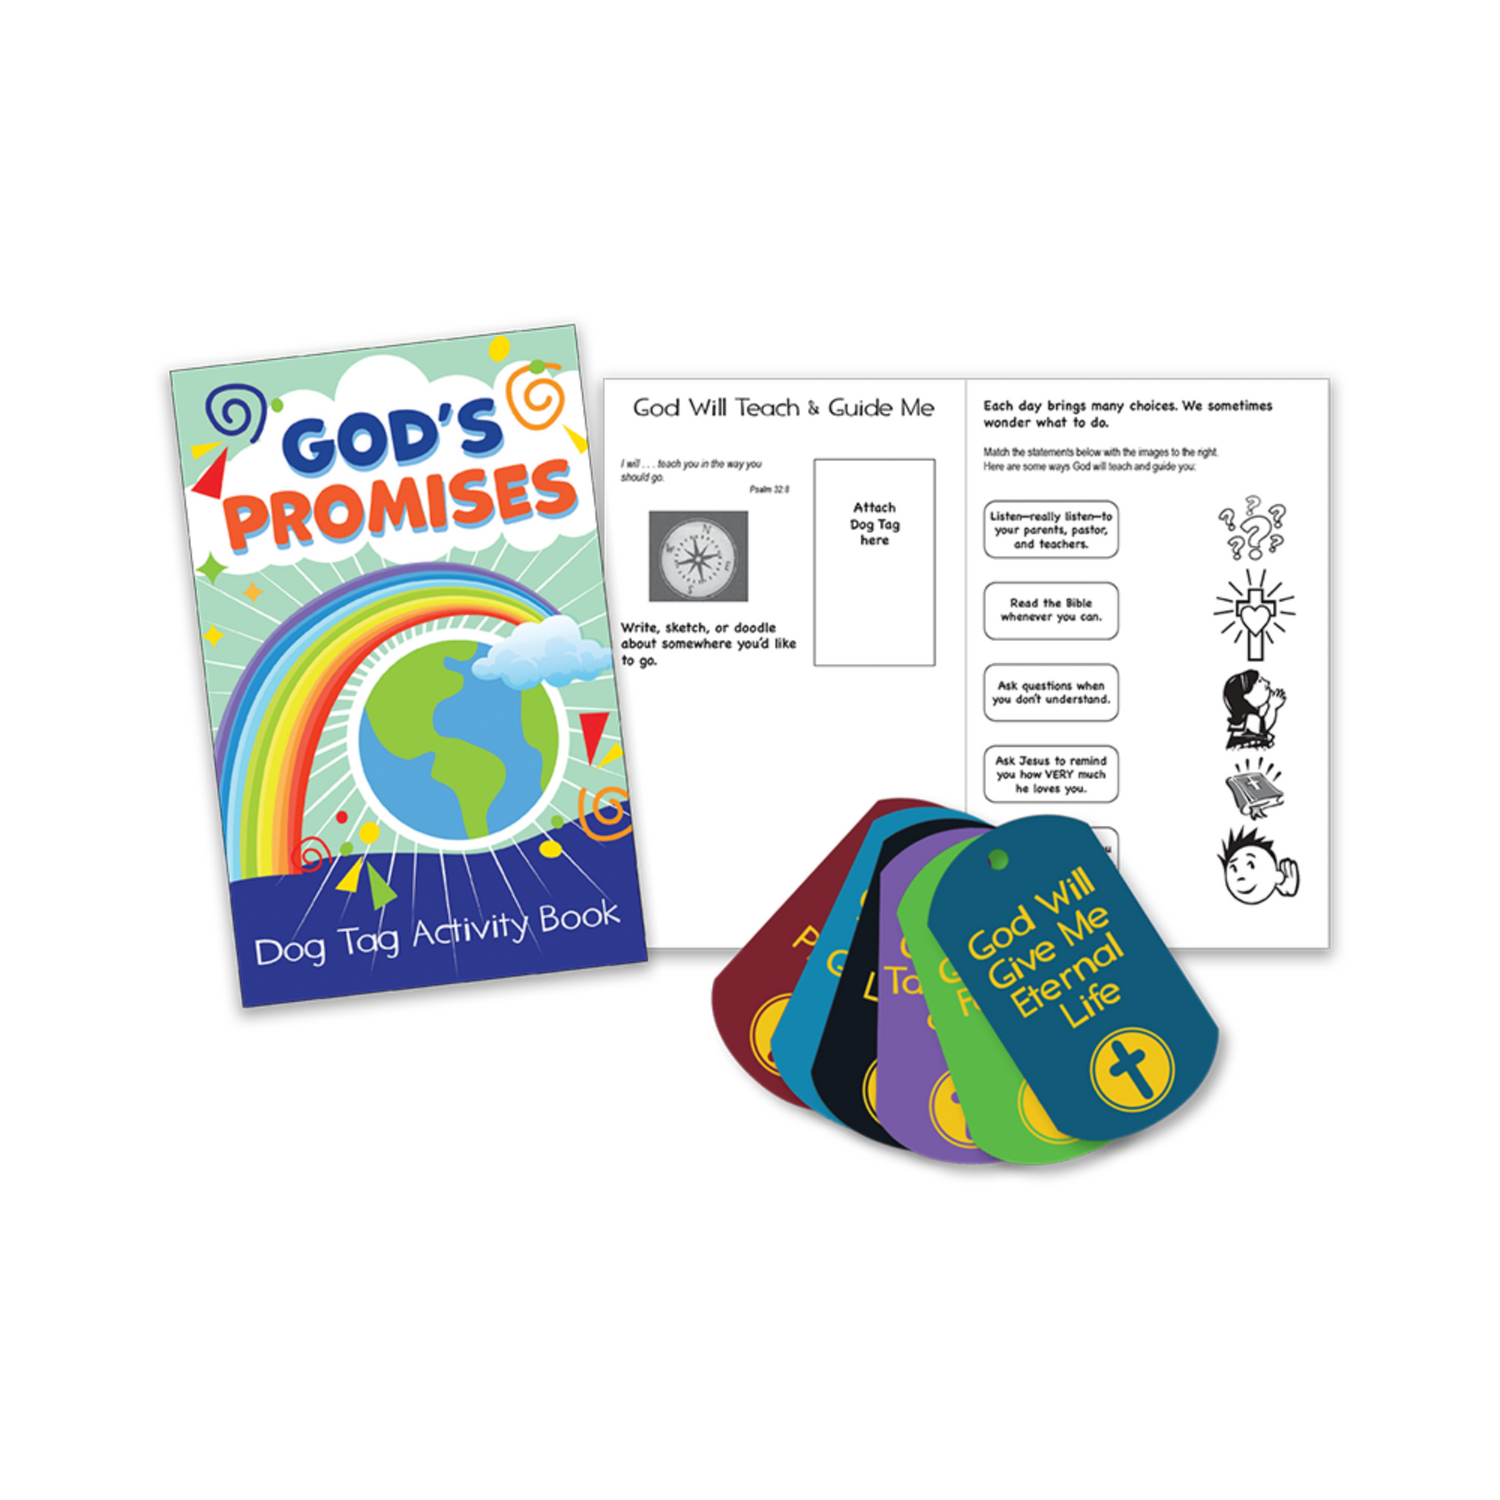 God's Promises 6 Activity Books & Dog Tags for Christian Children's Ministry